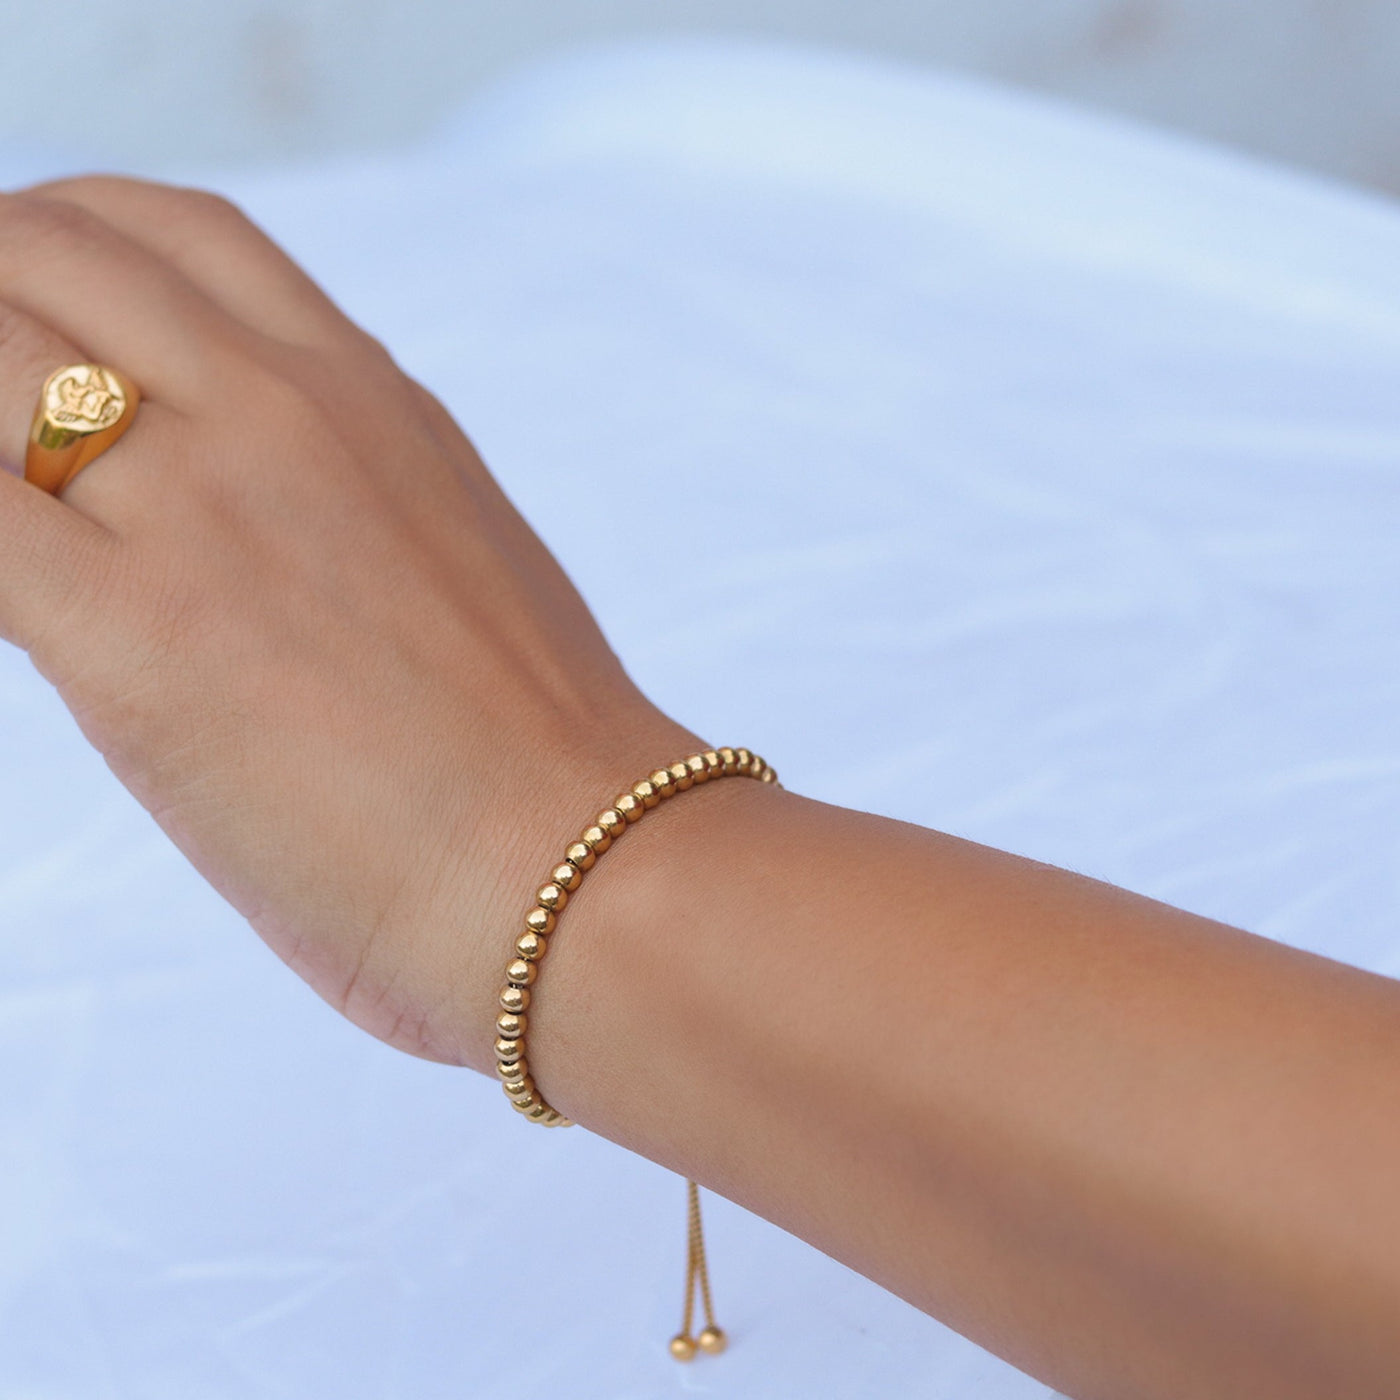 18k Gold-Filled Bead Bracelet